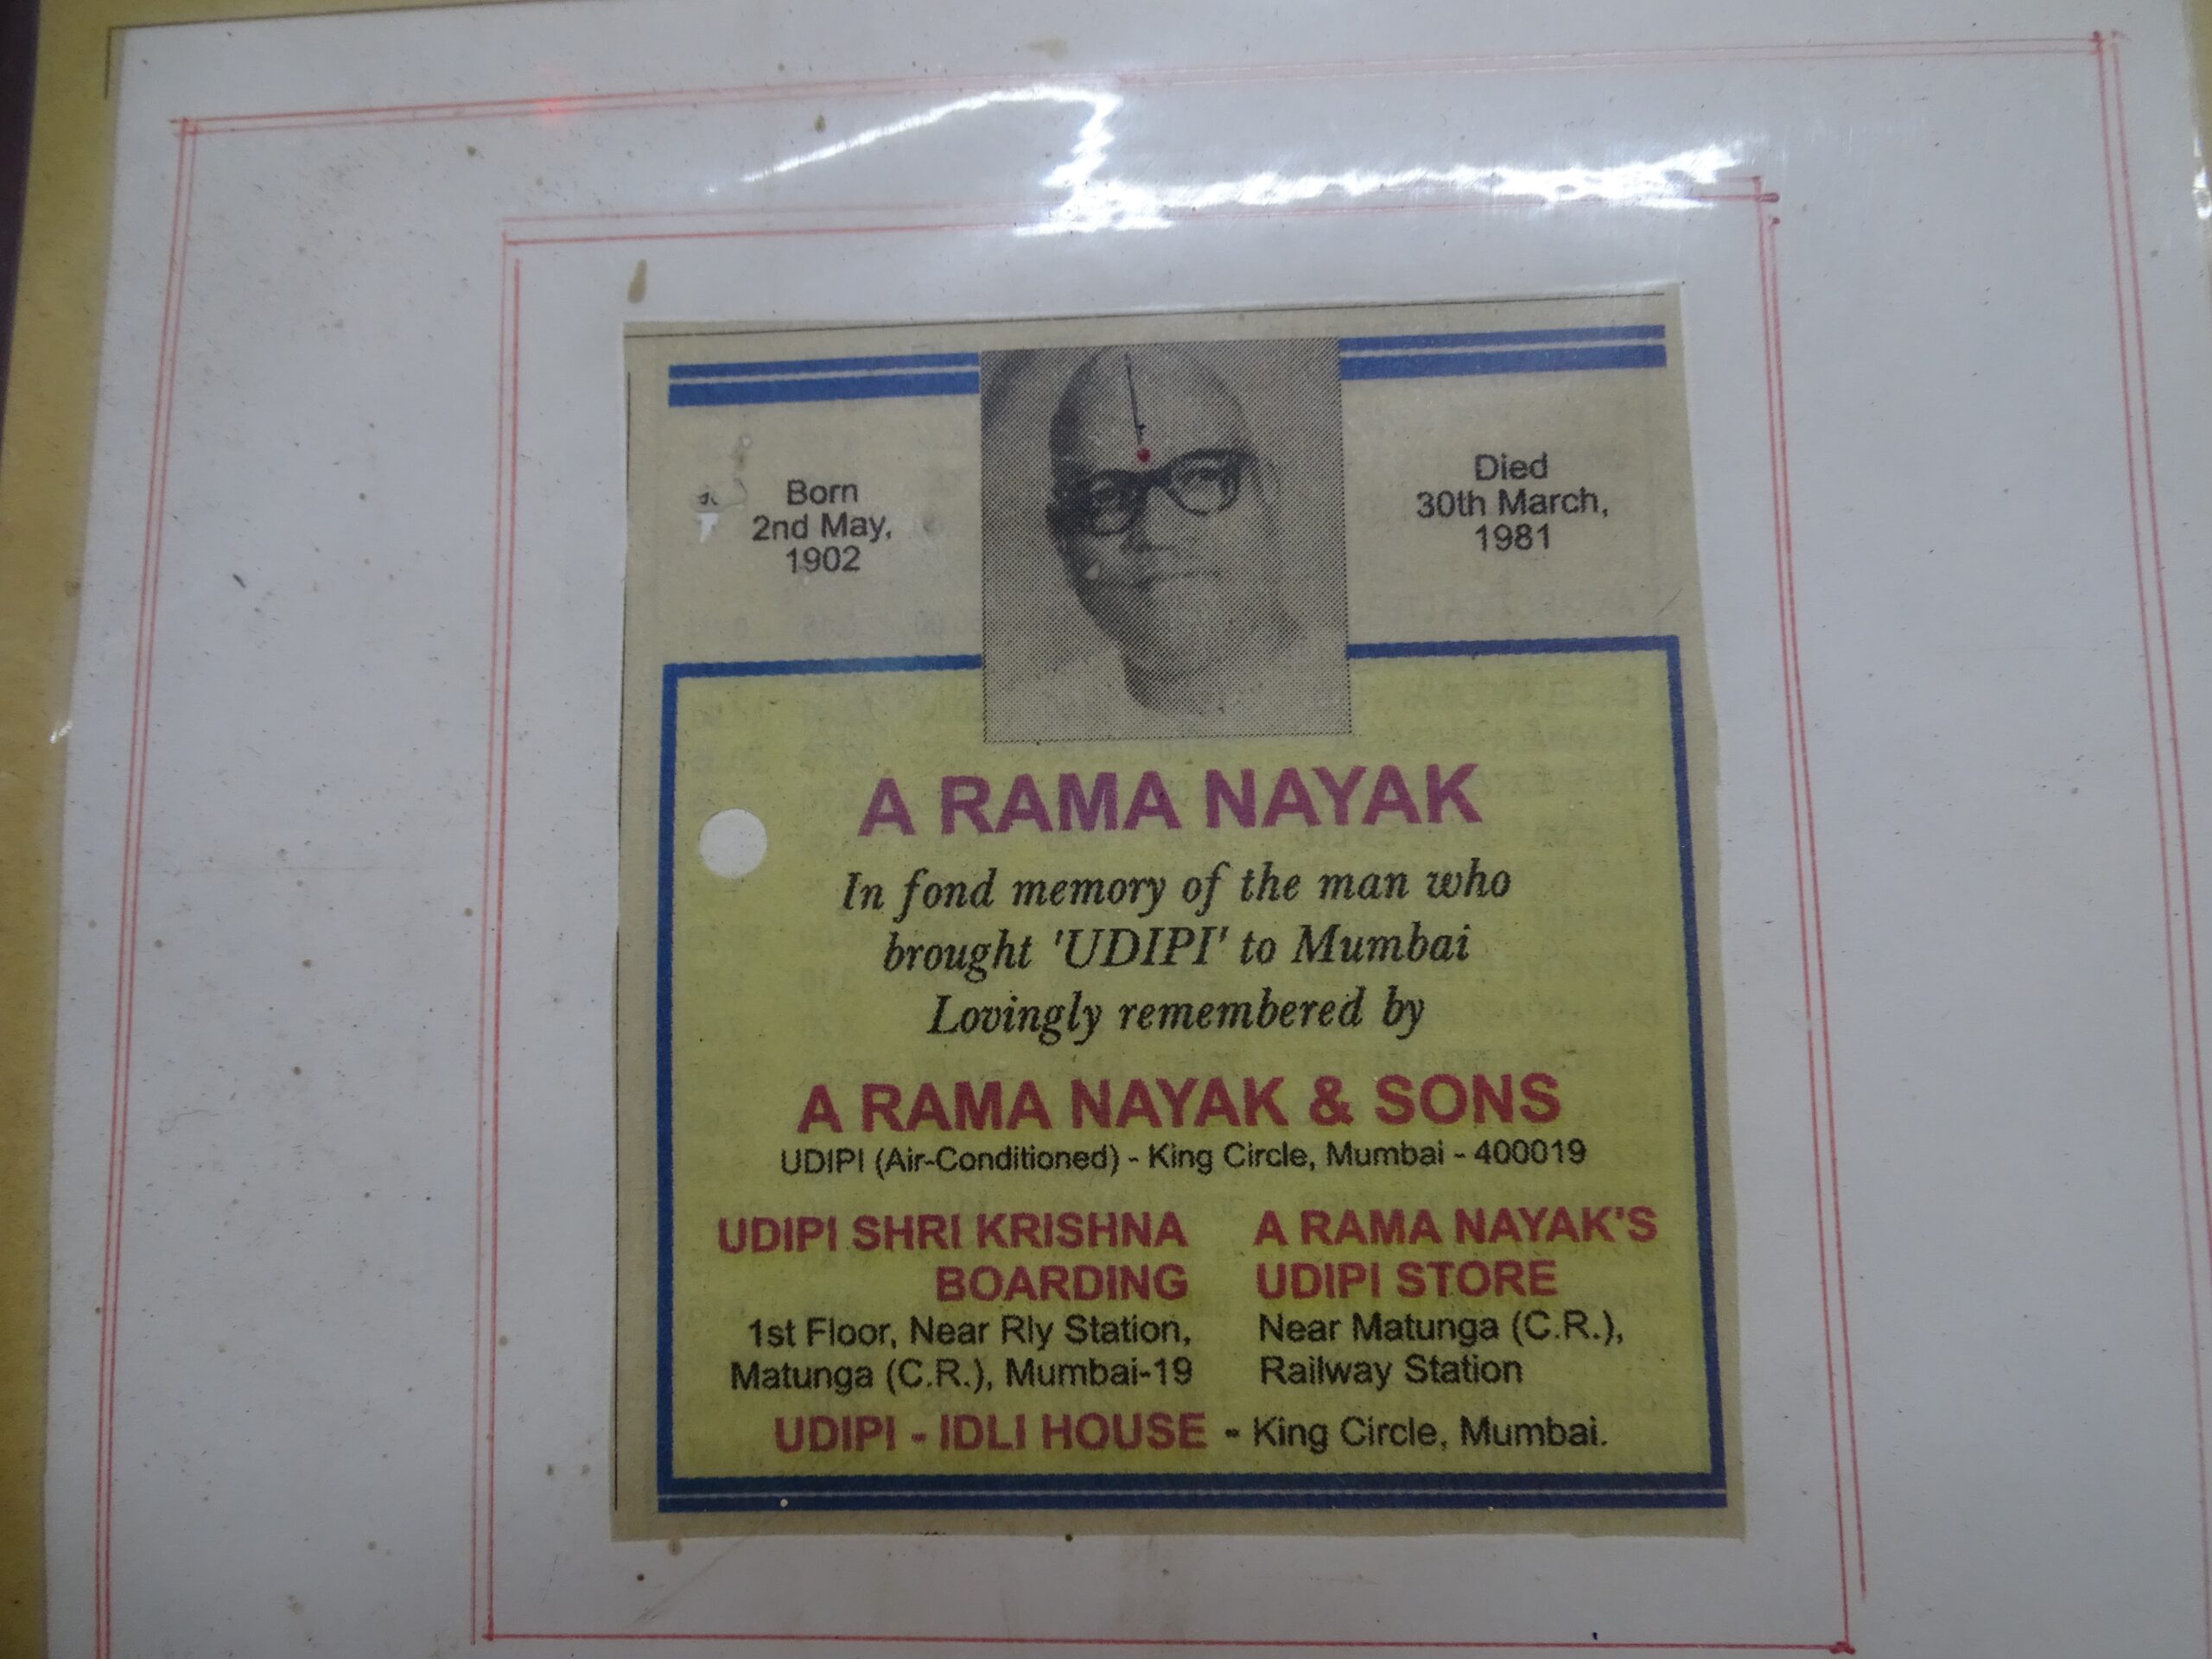 A Rama Nayak & Sons - Restaurants in Mumbai